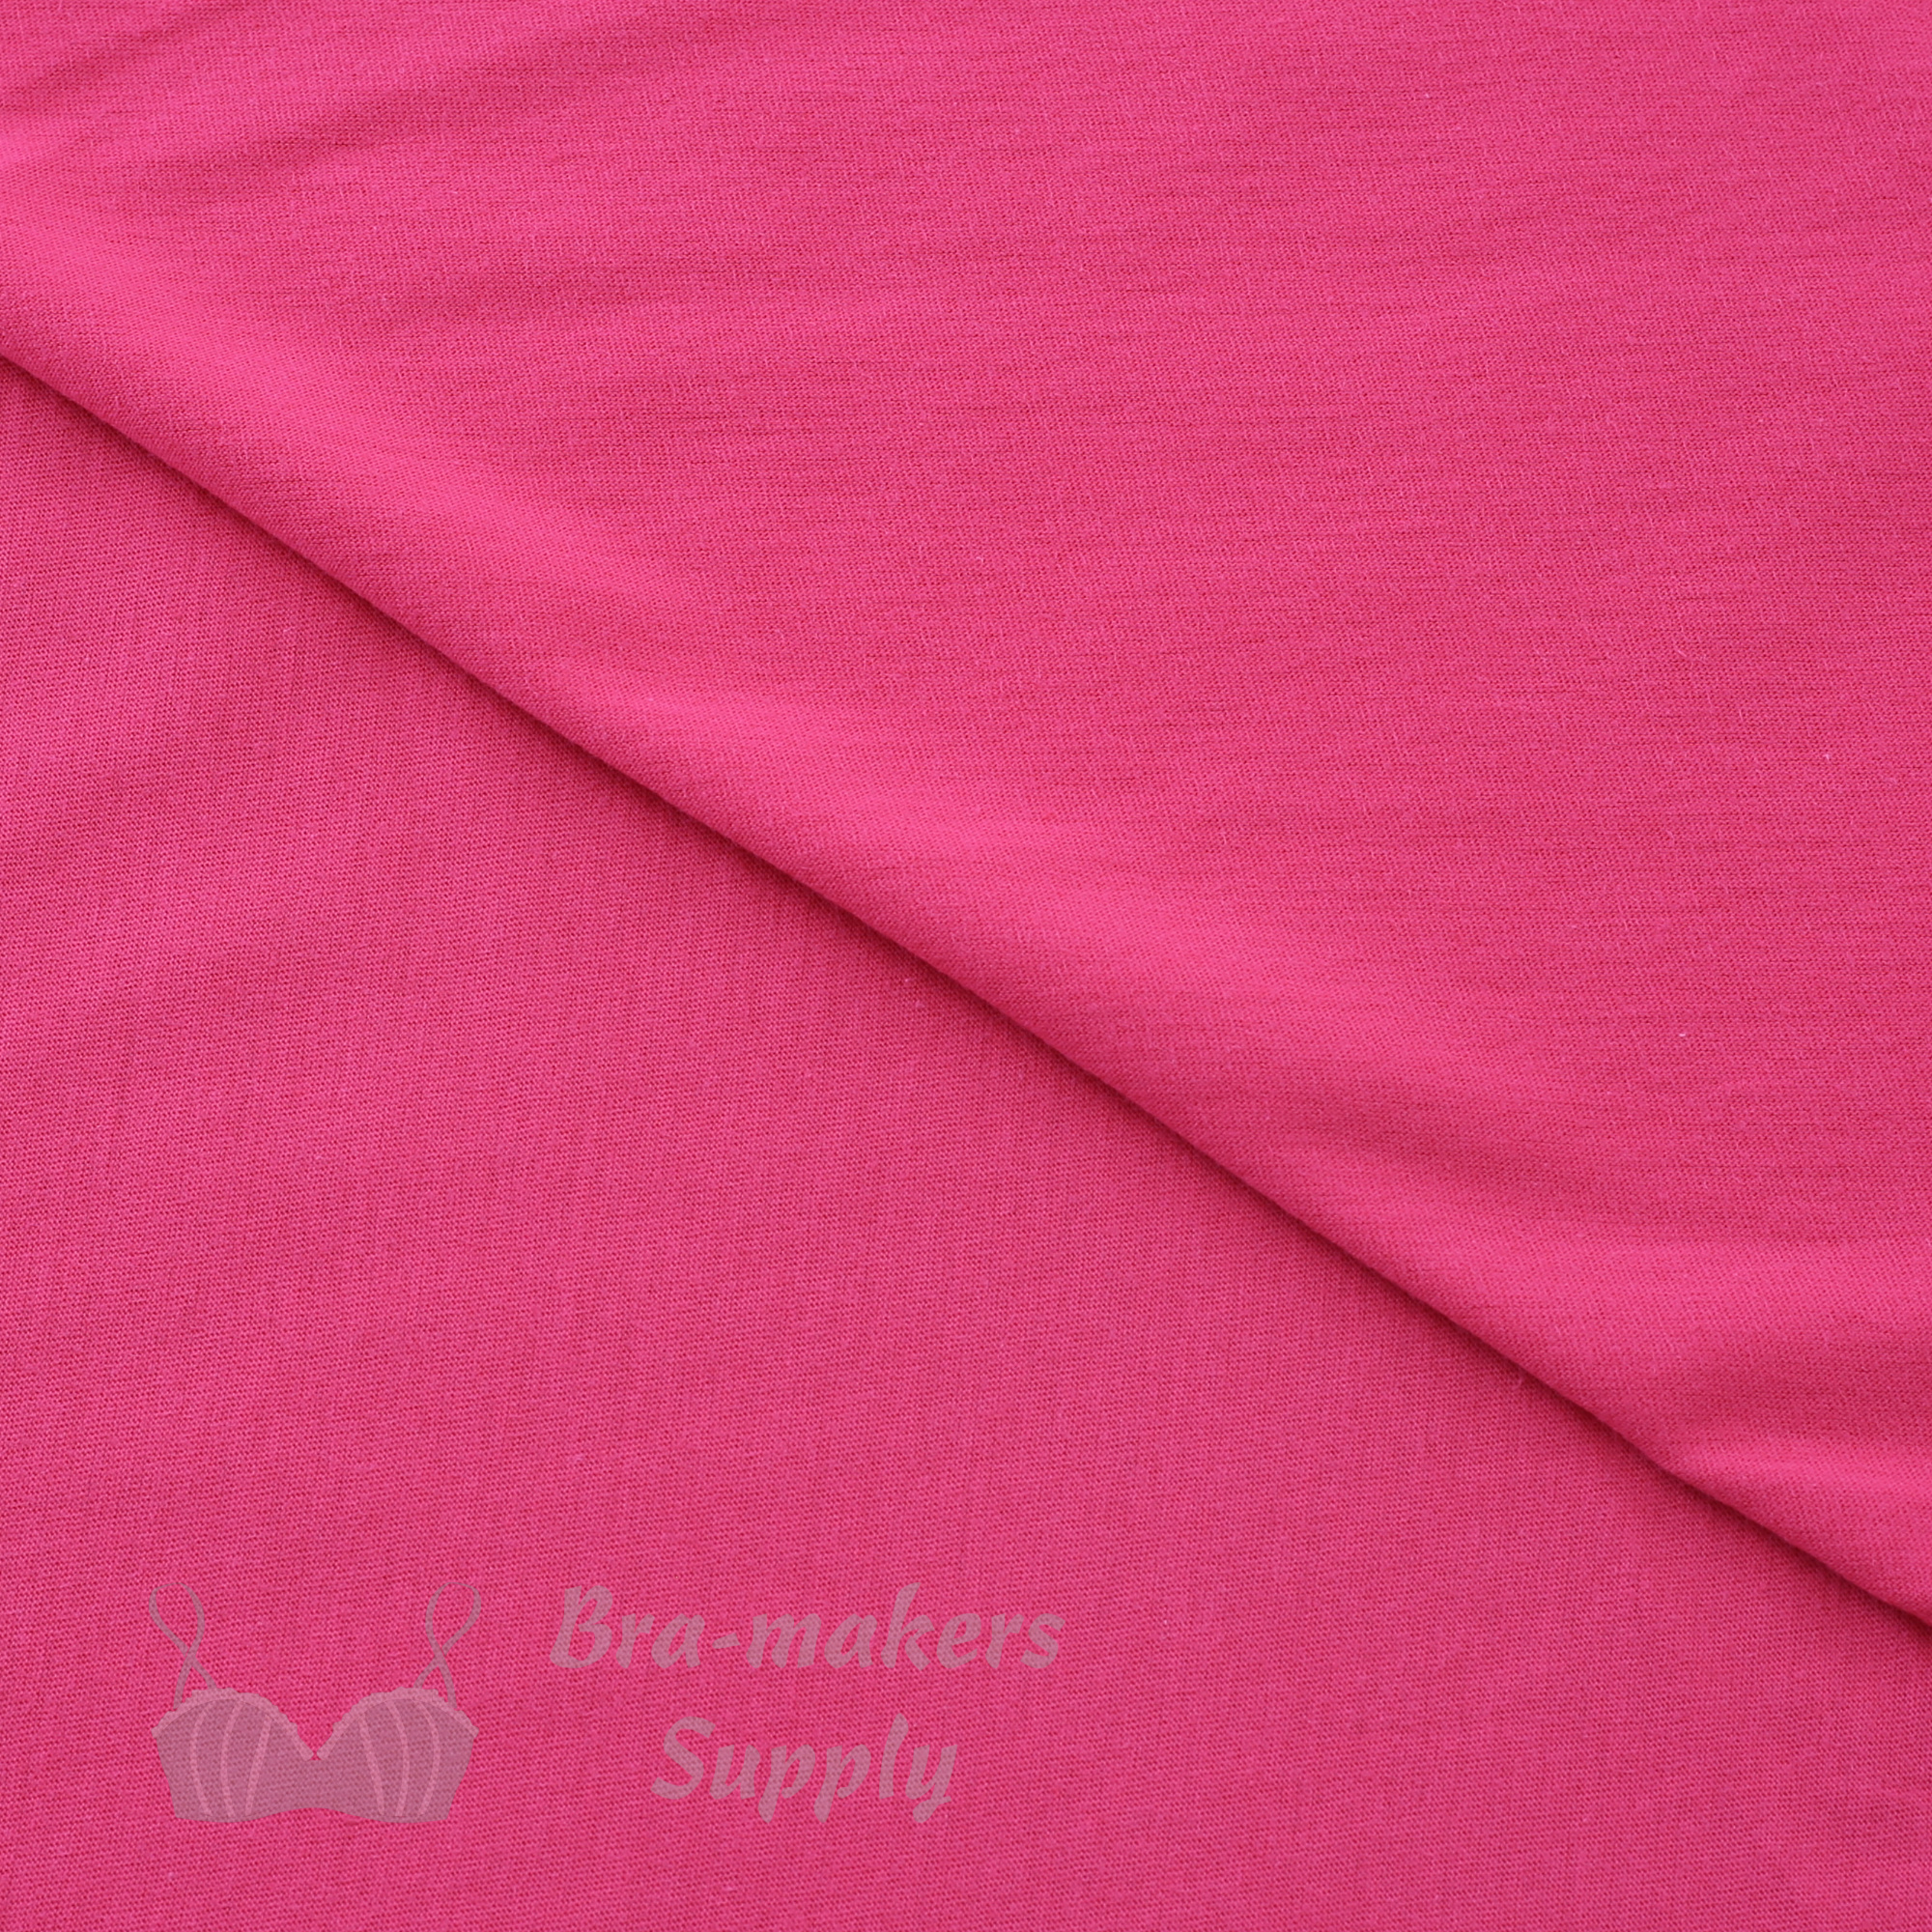 Matte Jersey Fabric Nylon Spandex Material for Underwear